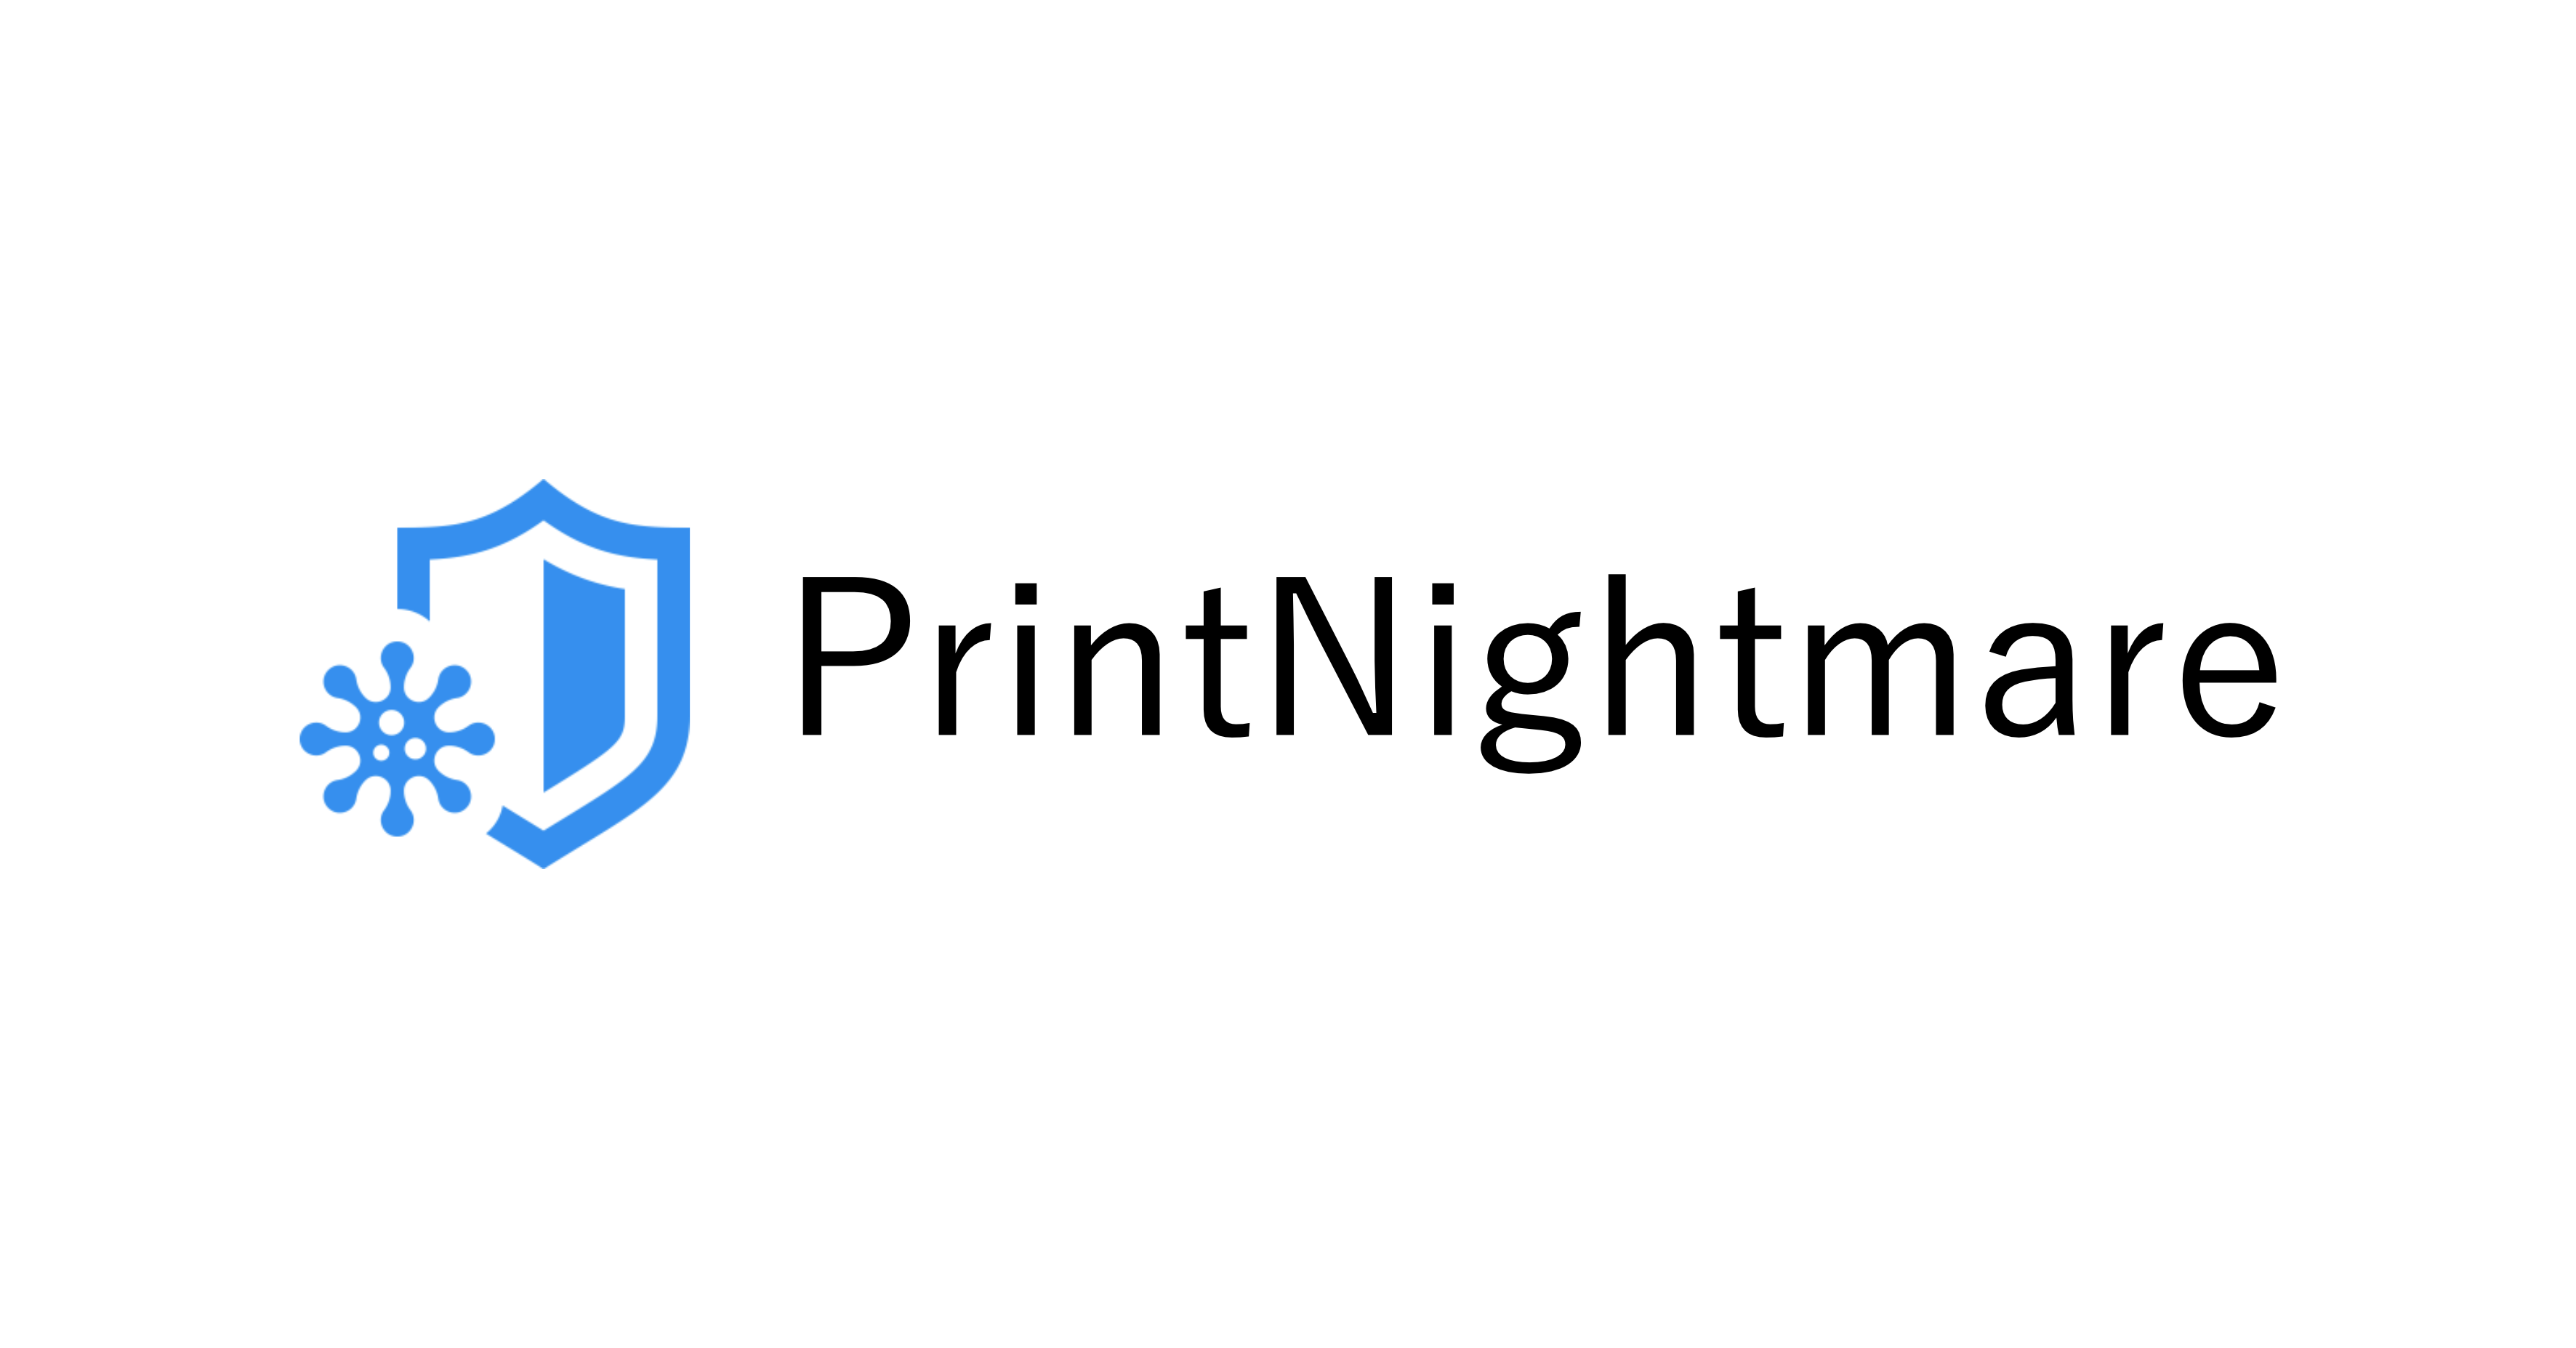 PrintNightmare